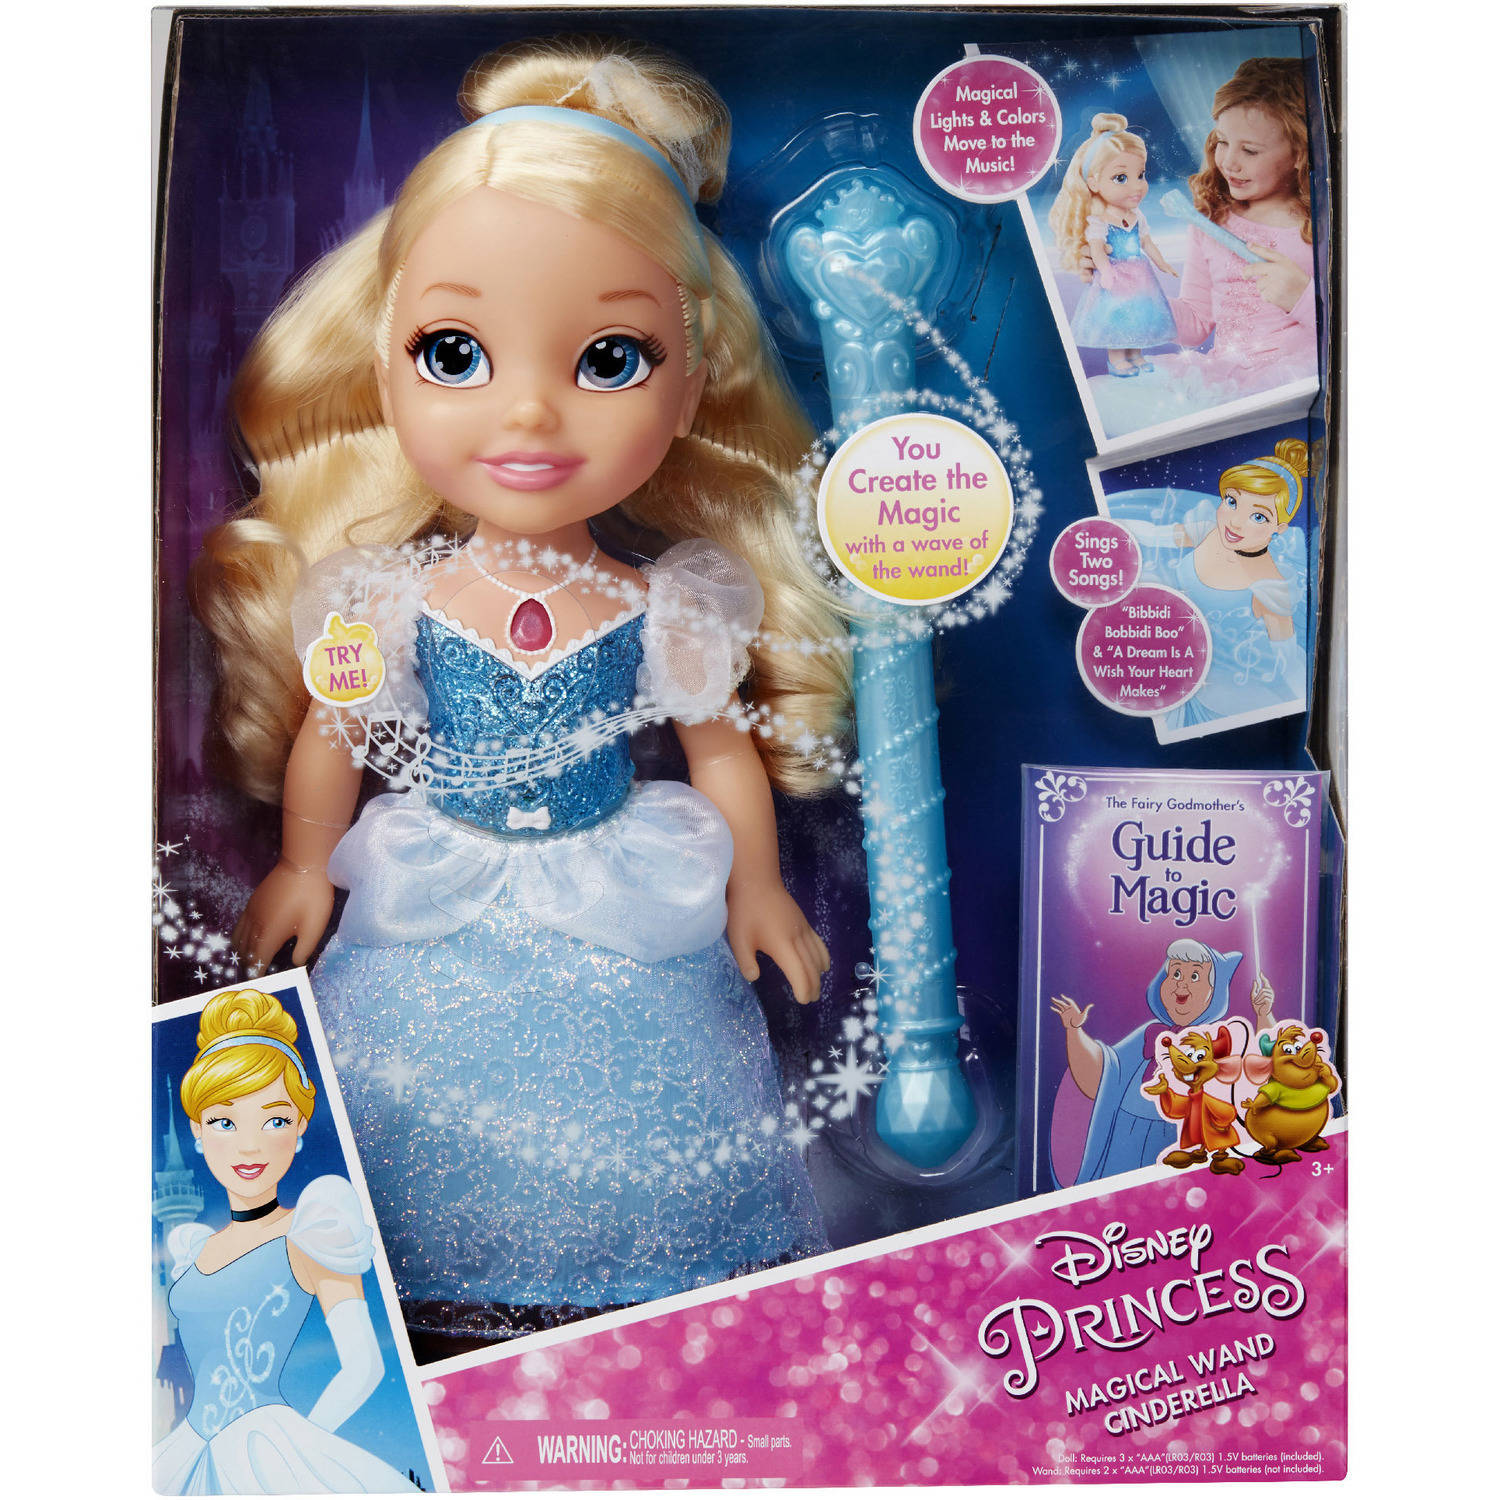 Disney Magical wand Cinderella Doll - image 2 of 3